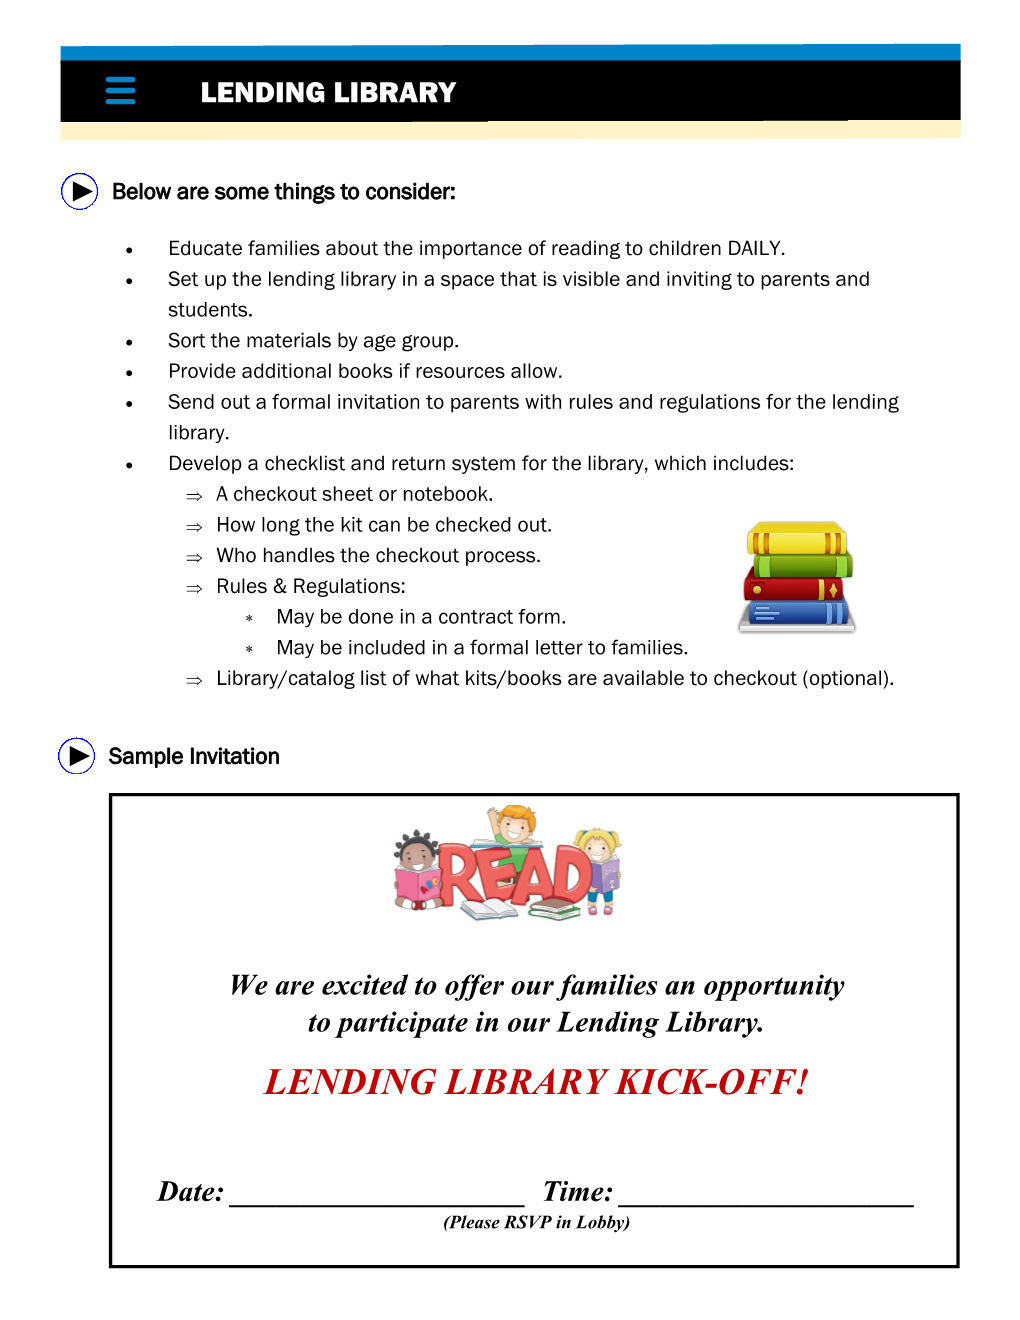 Lending Library Kick-Off!